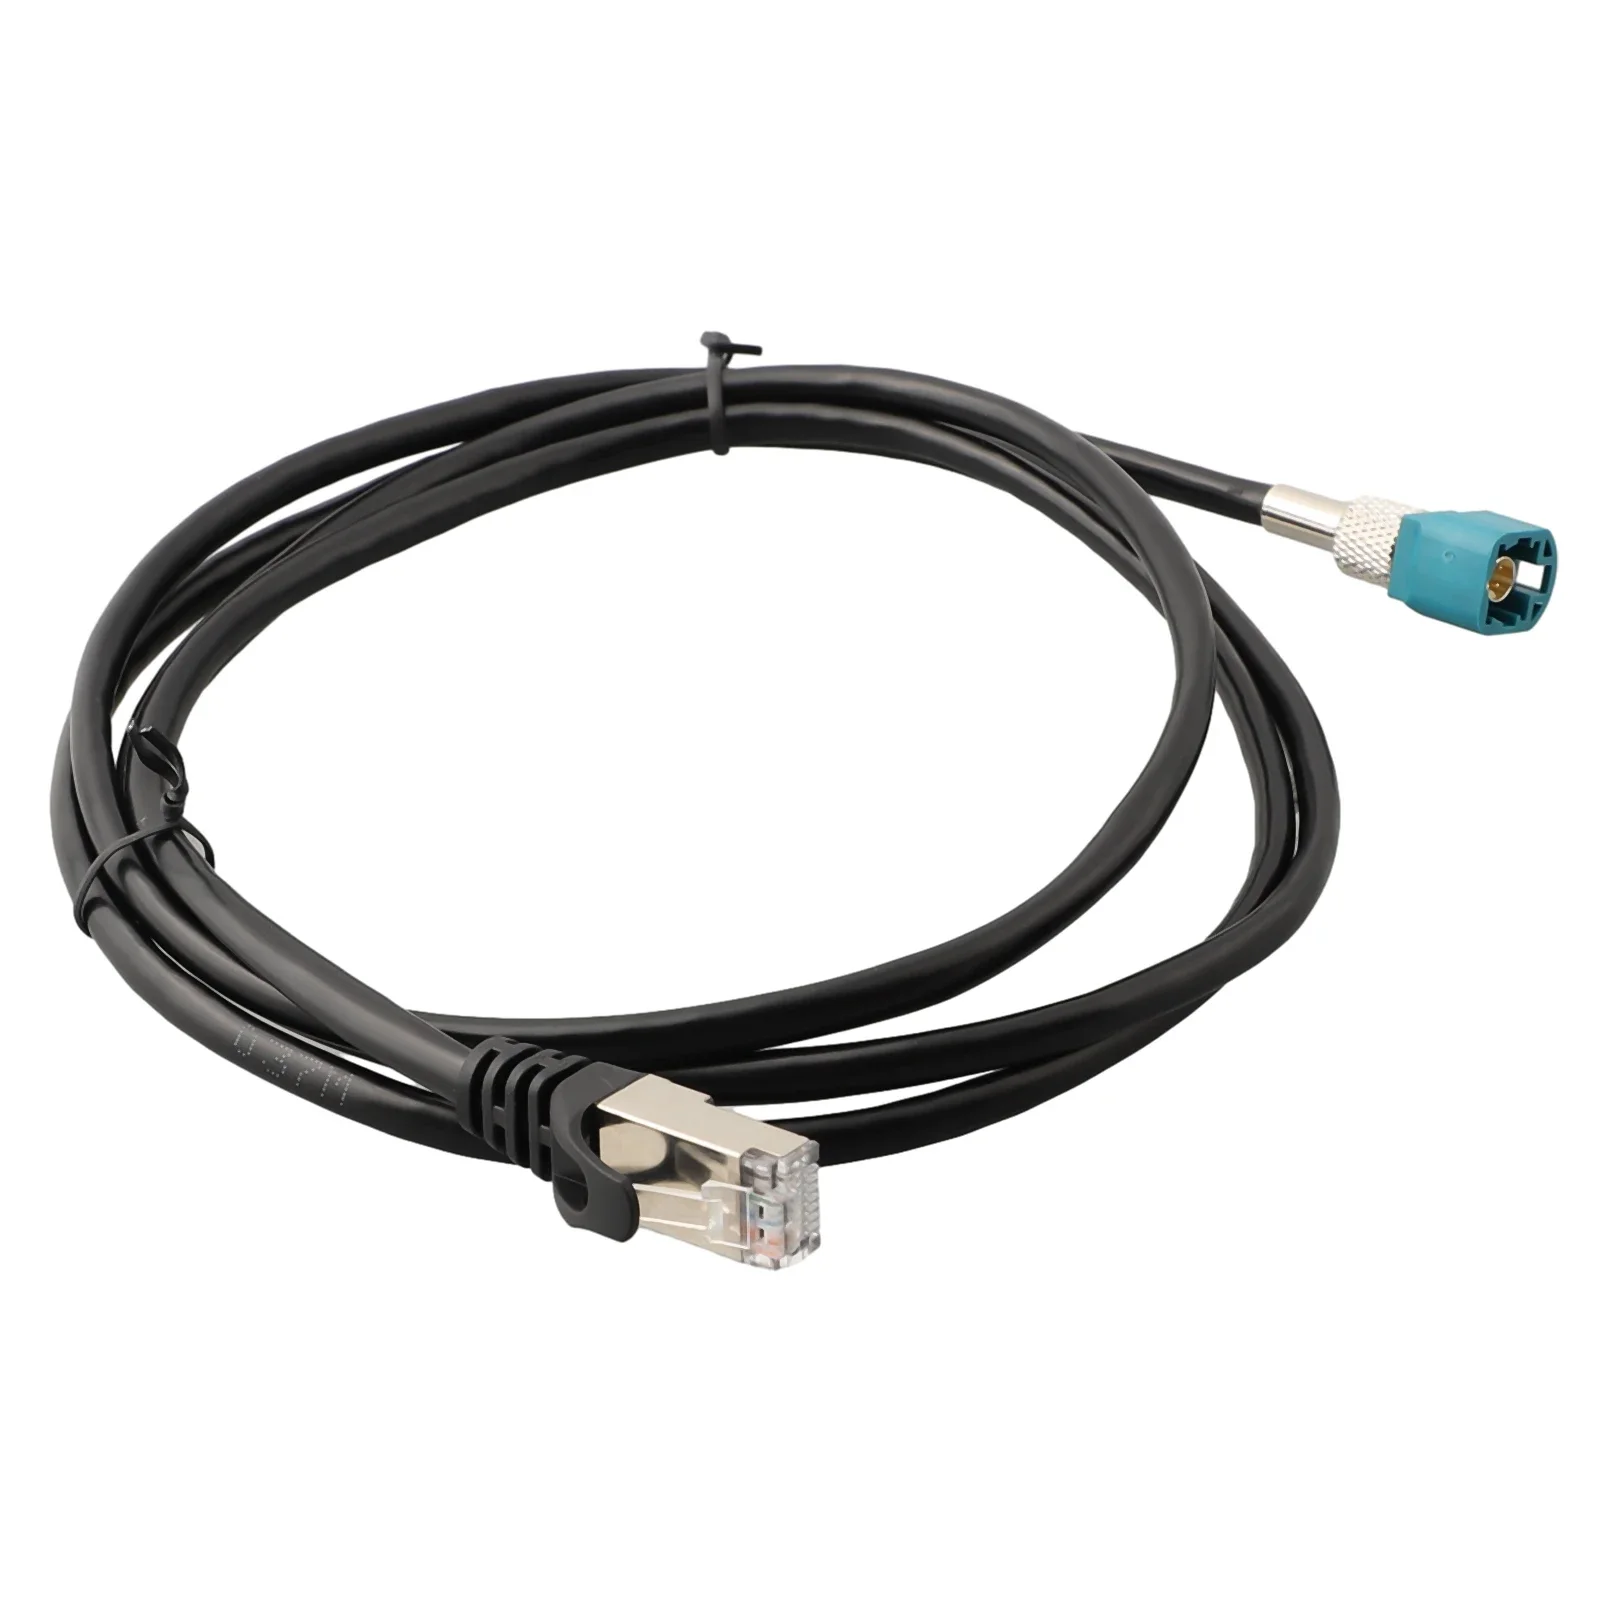 

1PCS Diagnostic Service Cable Fits For Tesla Model S/X 2012-2016 Black Plastic Toolbox Data Cable 1013230-00-A Auto Accessories